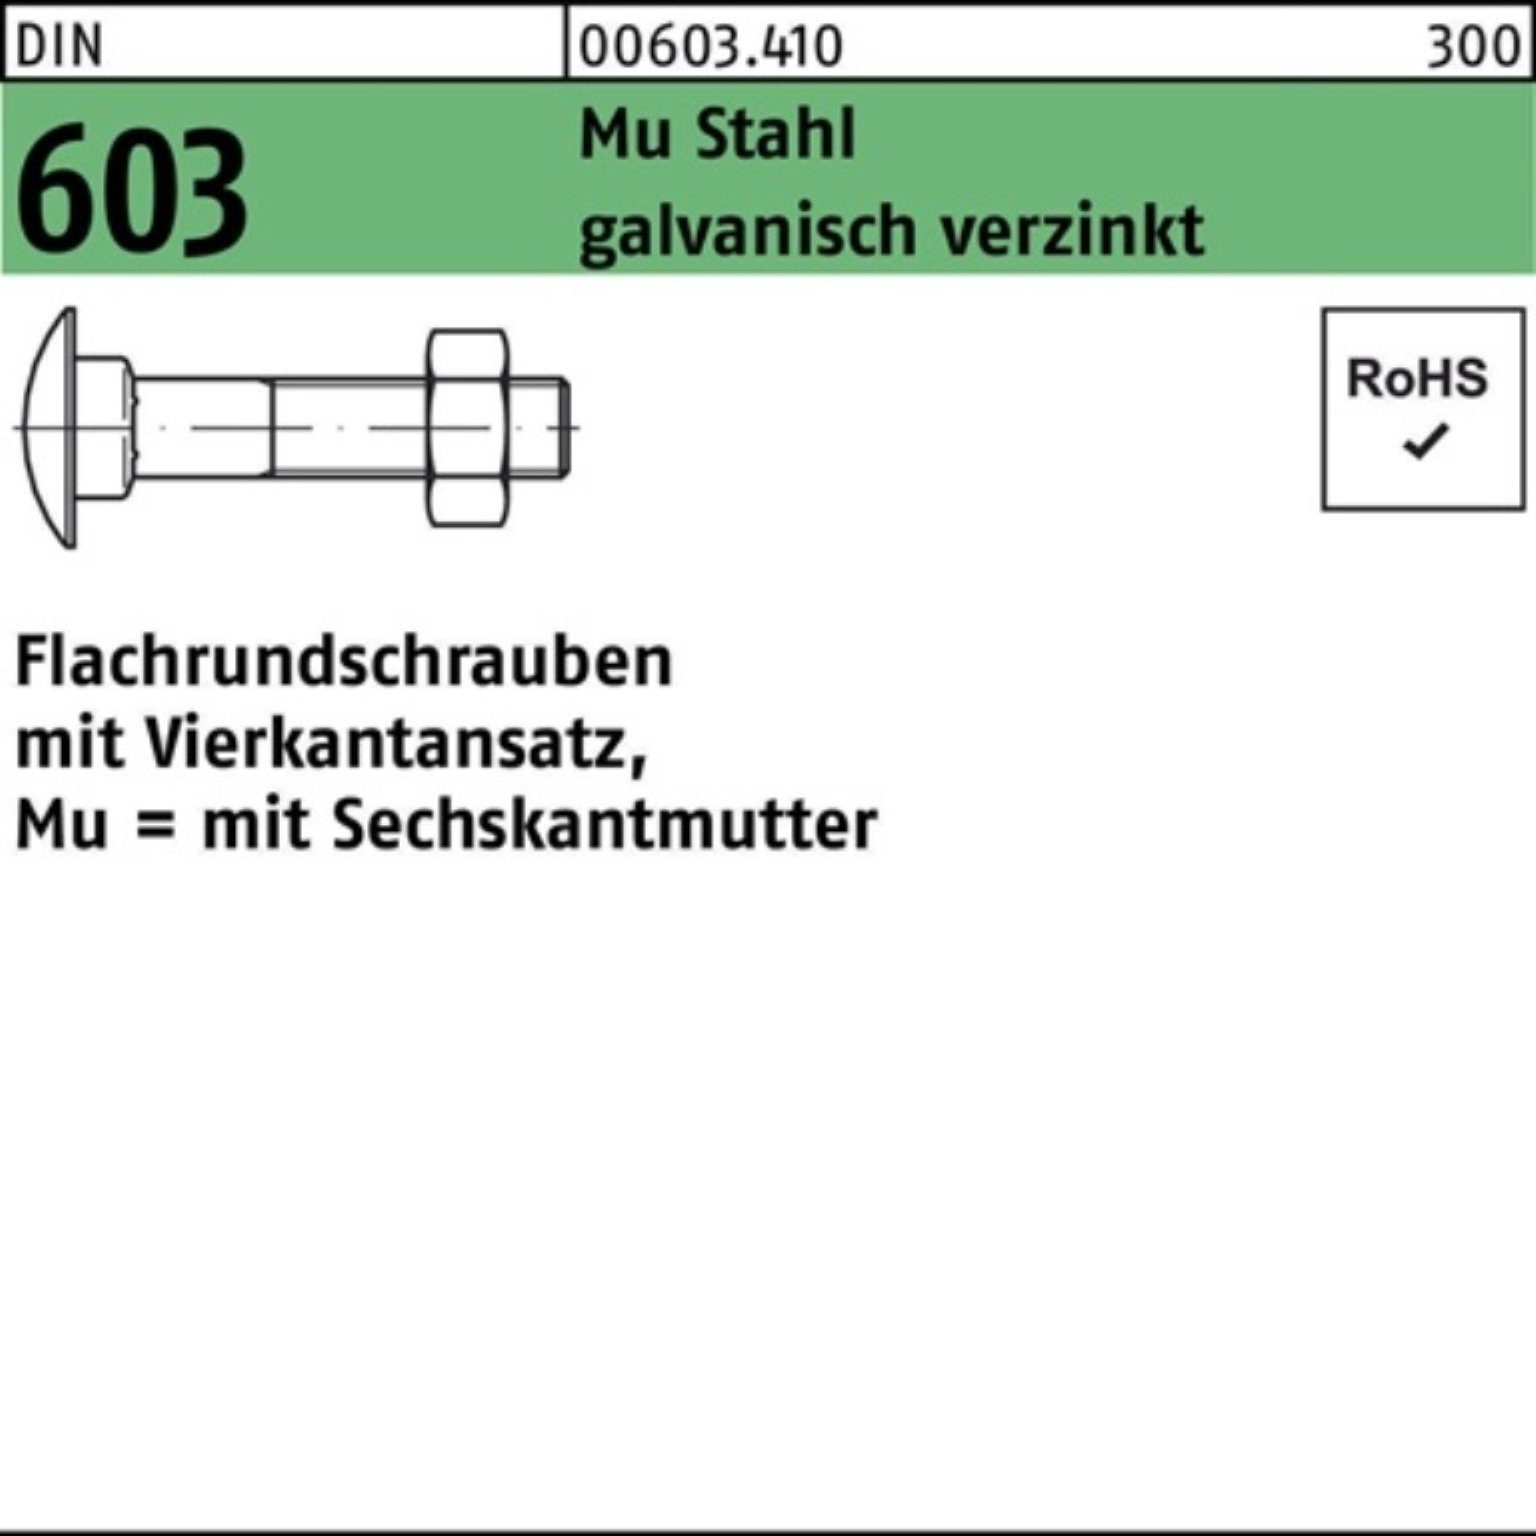 603 Reyher Pack M12x280 Vierkantansatz/6-ktmutter 100er DIN Flachrundschraube Schraube